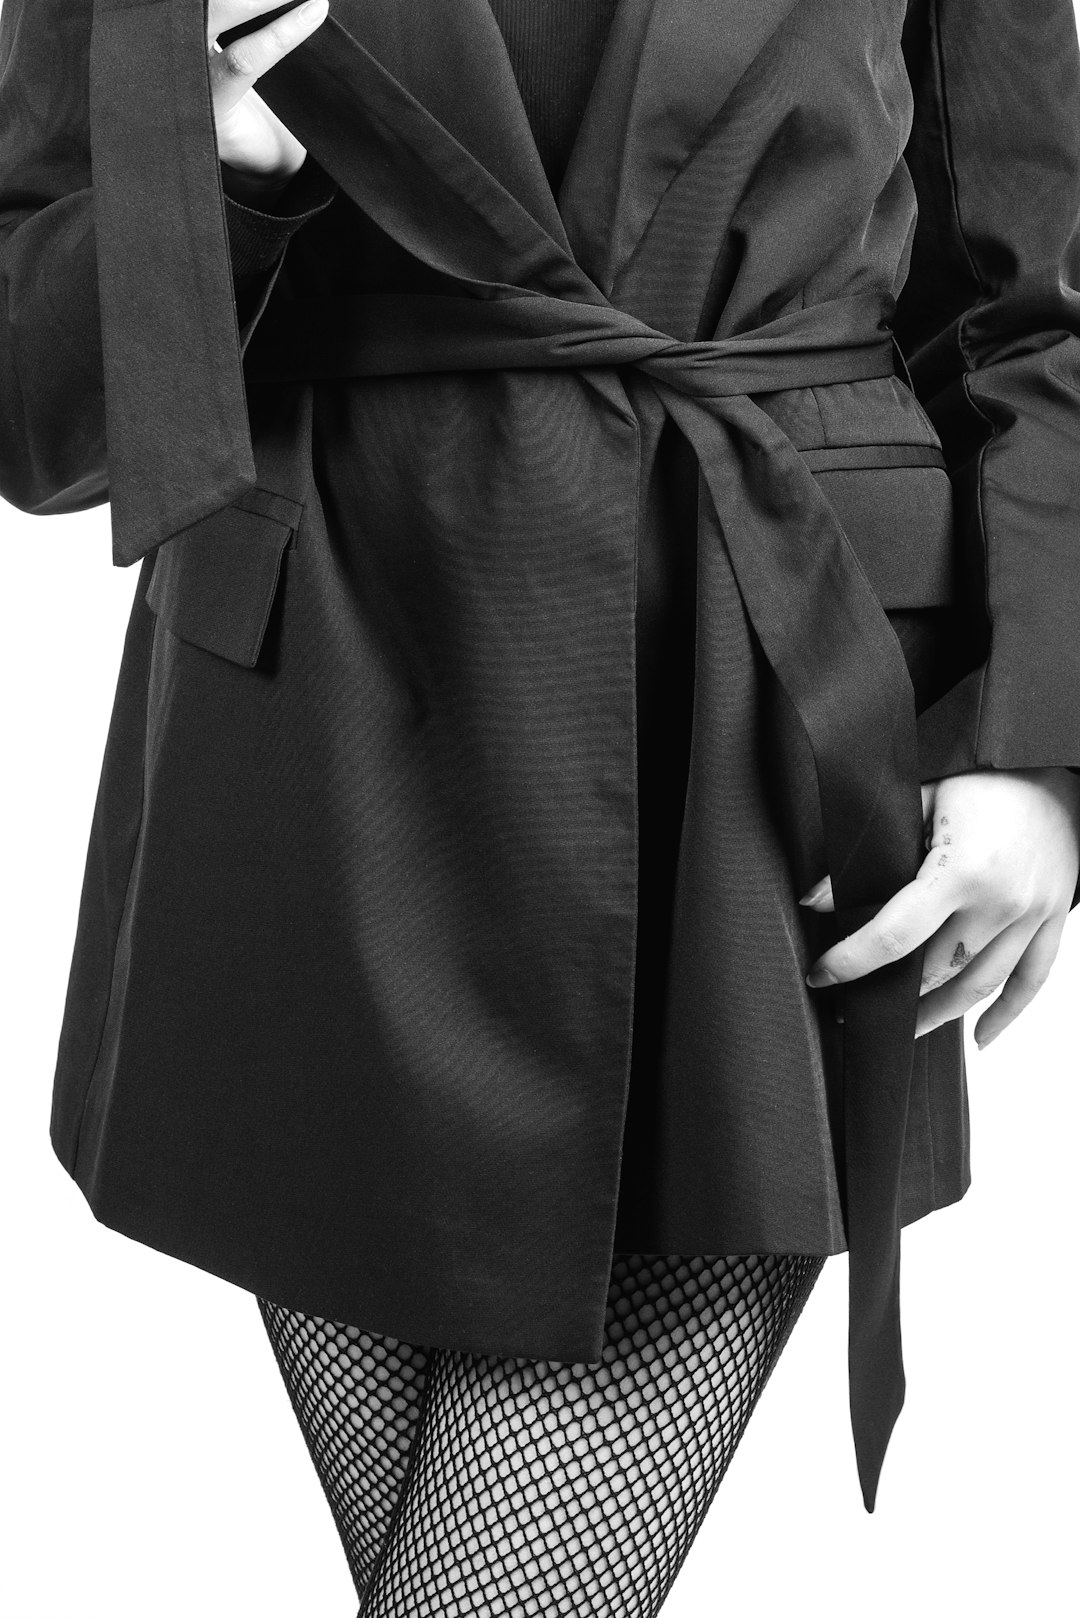 woman in black and white polka dot dress